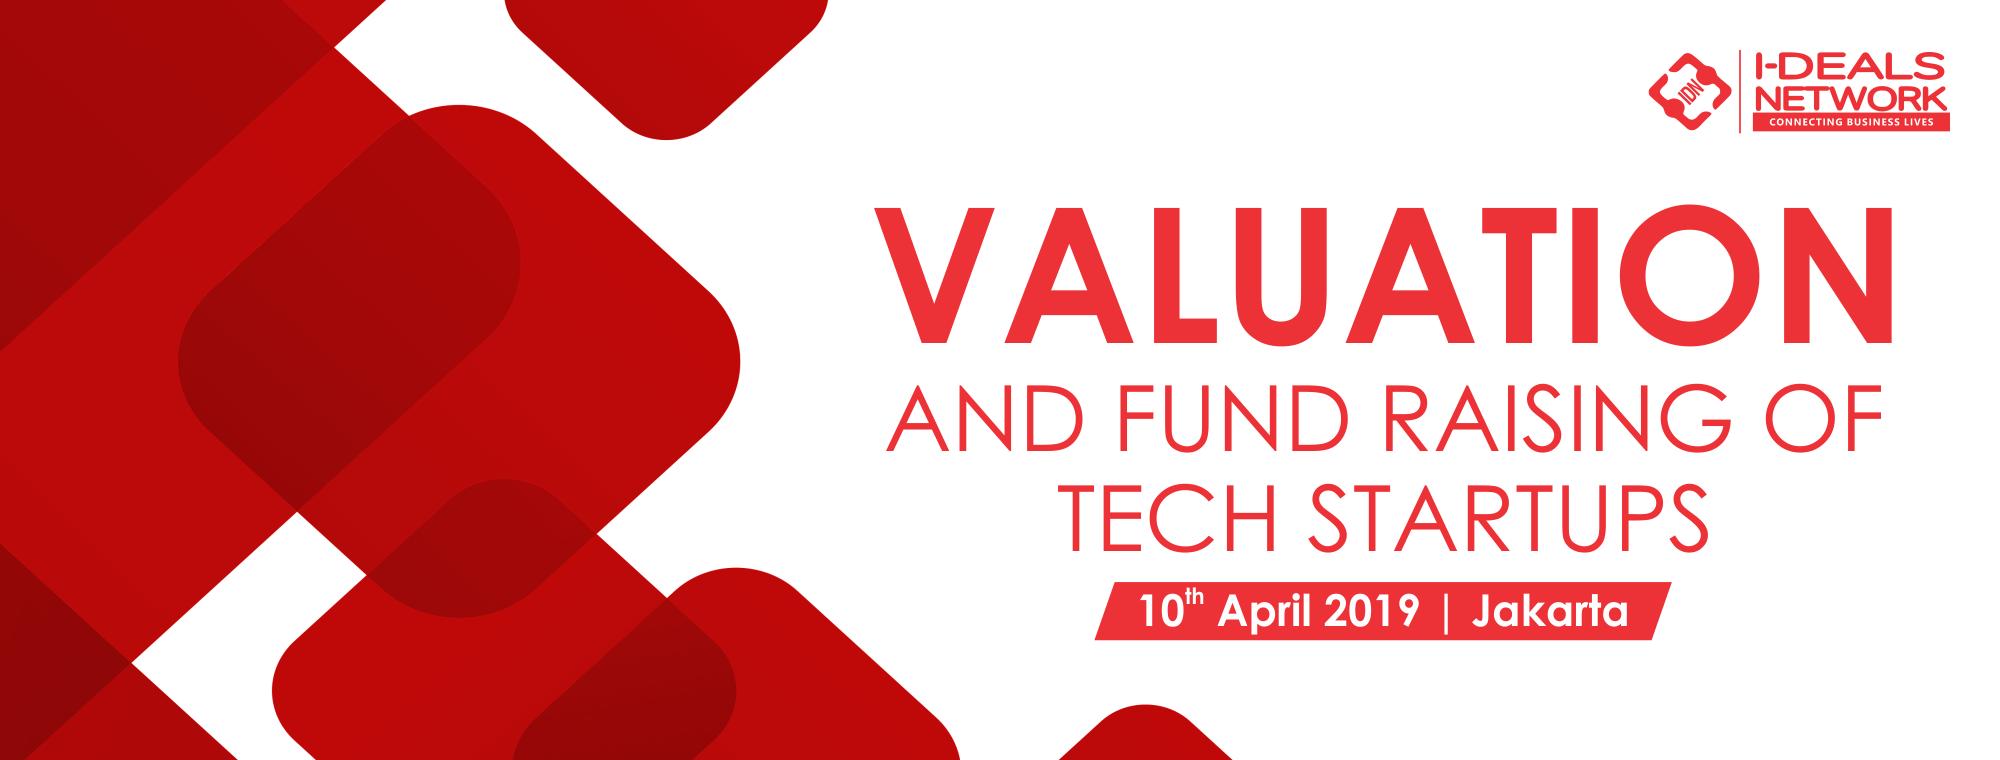 Valuation & Fund Raising of Tech Startups, 10th April'19 | Jakarta, Jakarta, Indonesia